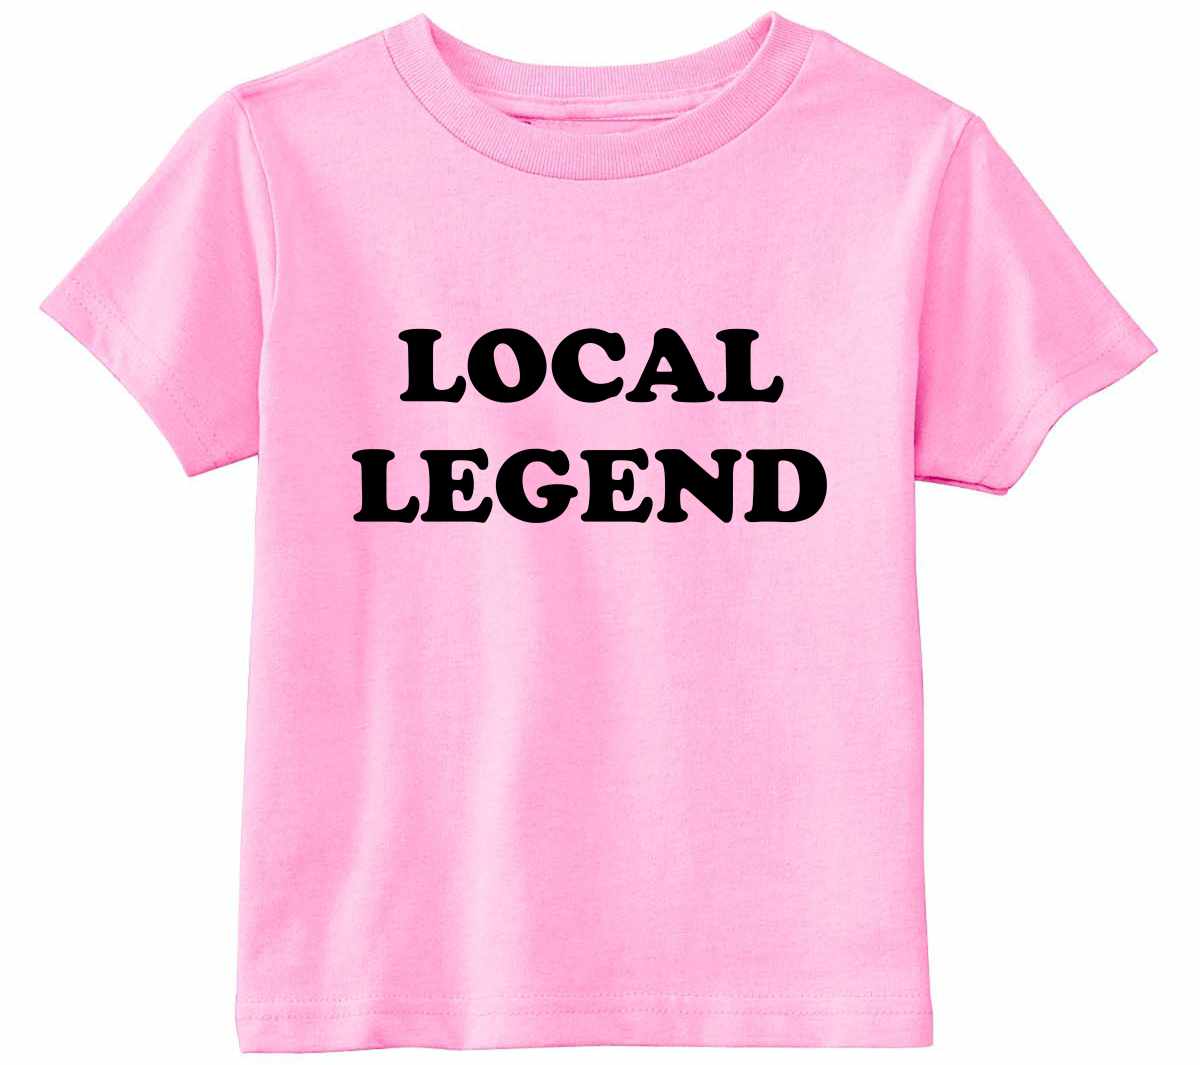 Local Legend on Infant-Toddler T-Shirt (#1196-7)